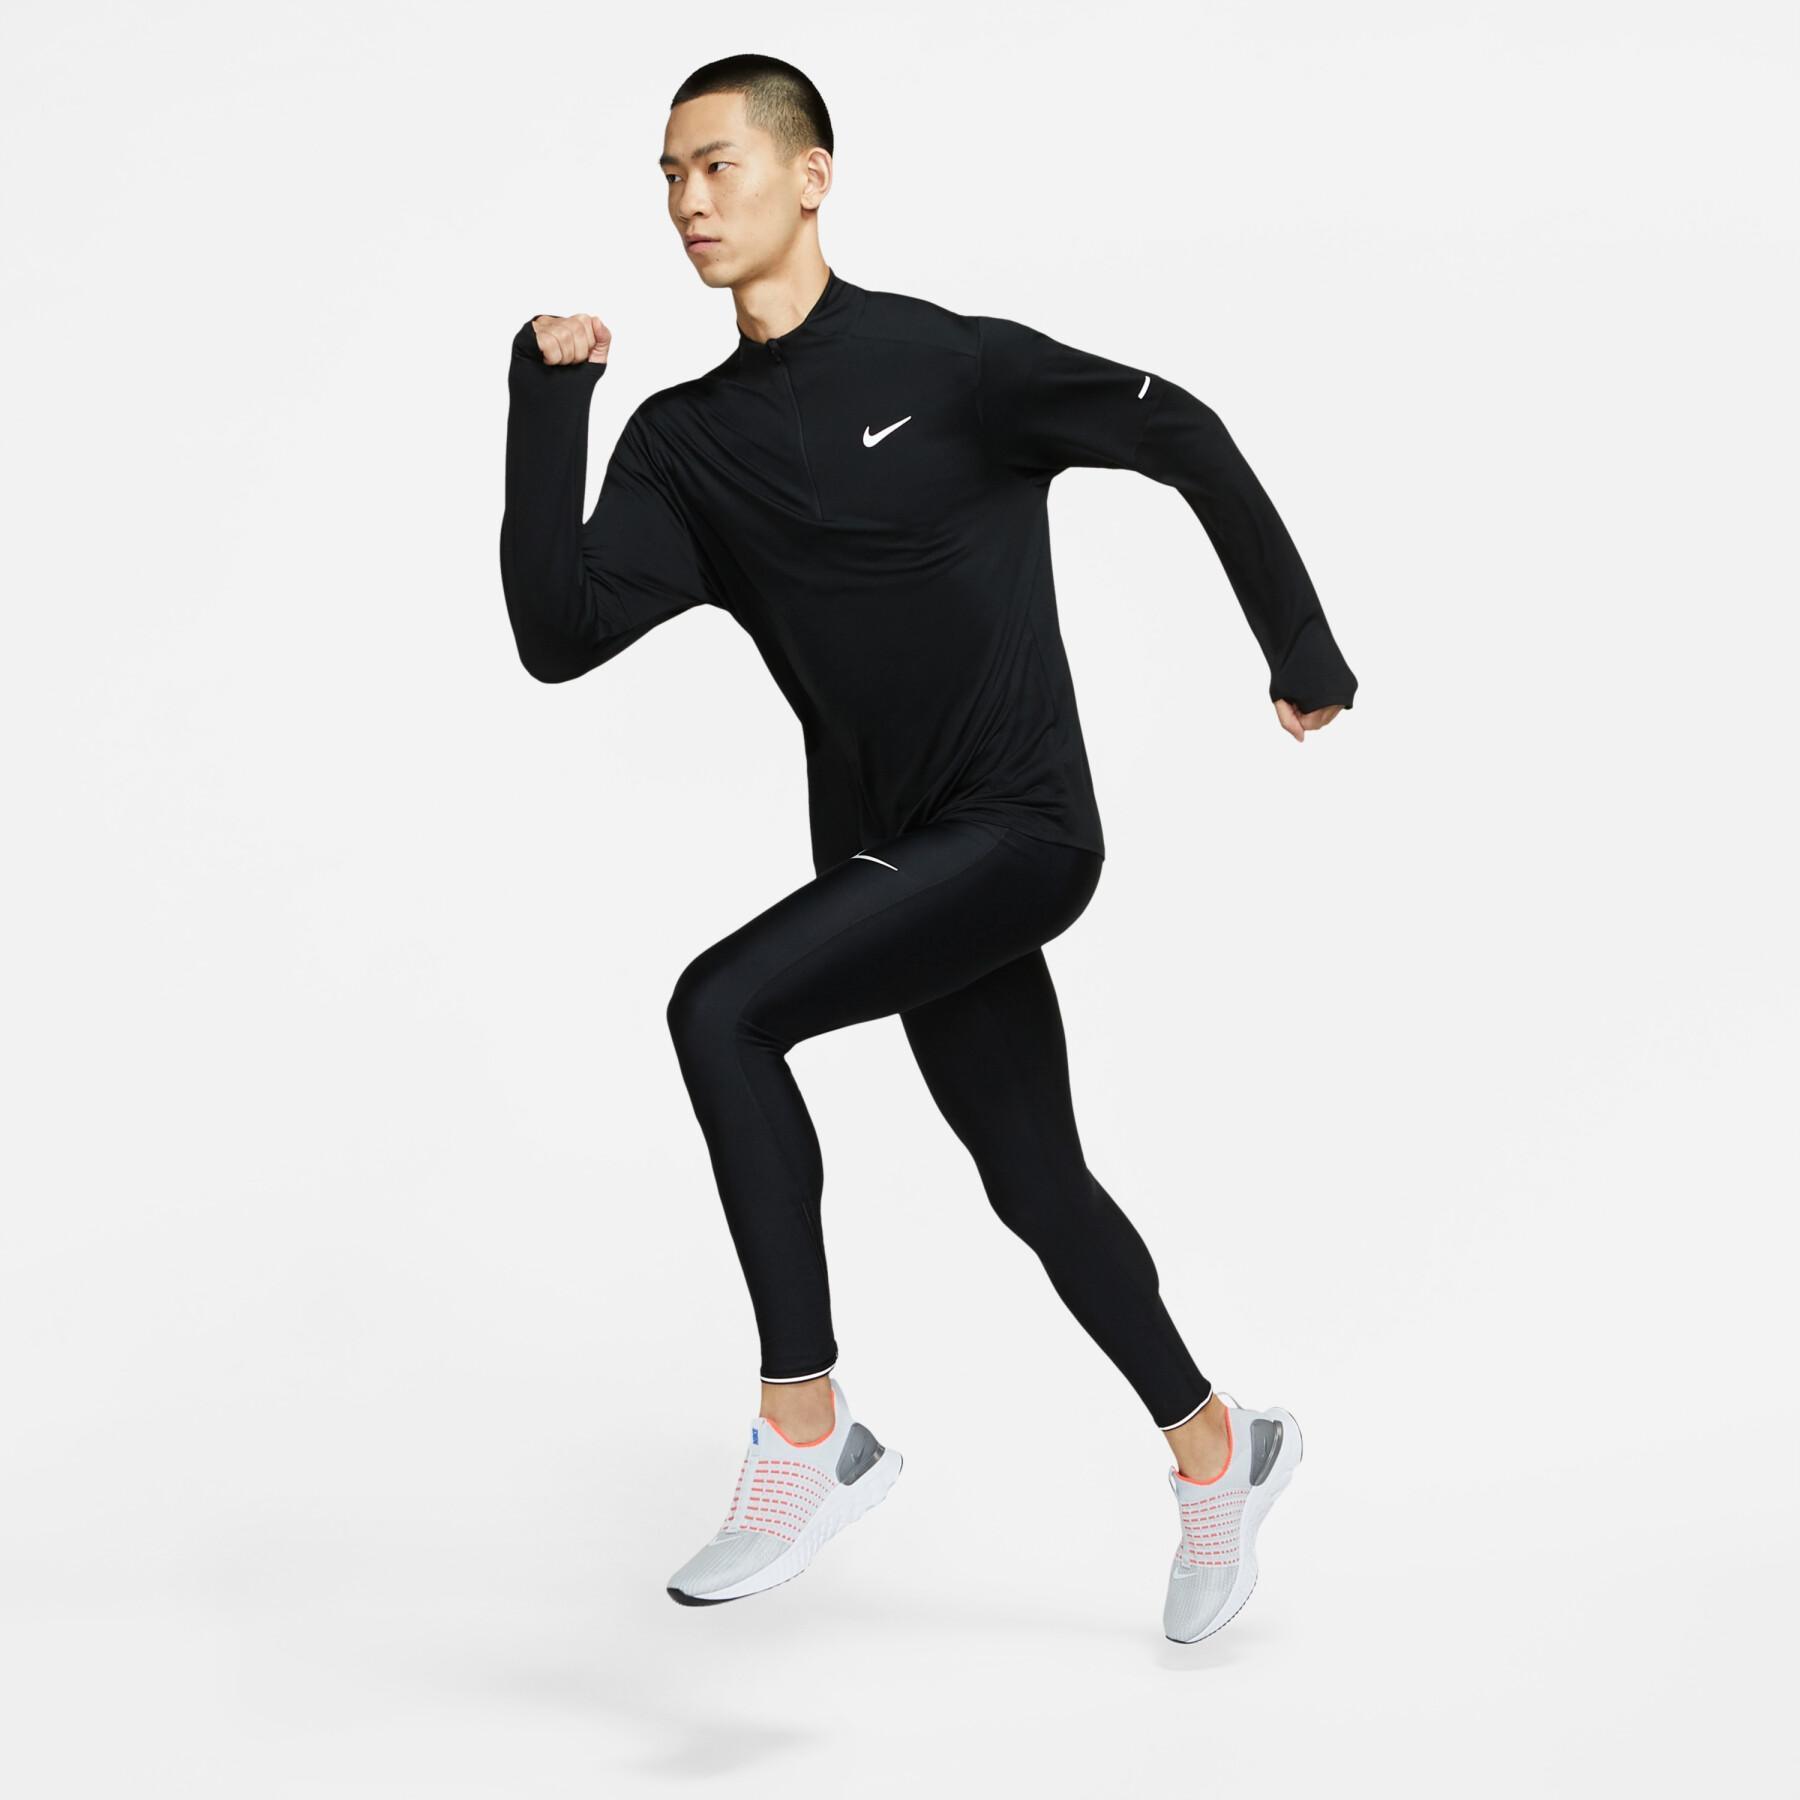 Jacke Nike dynamic fit elmnt top hz